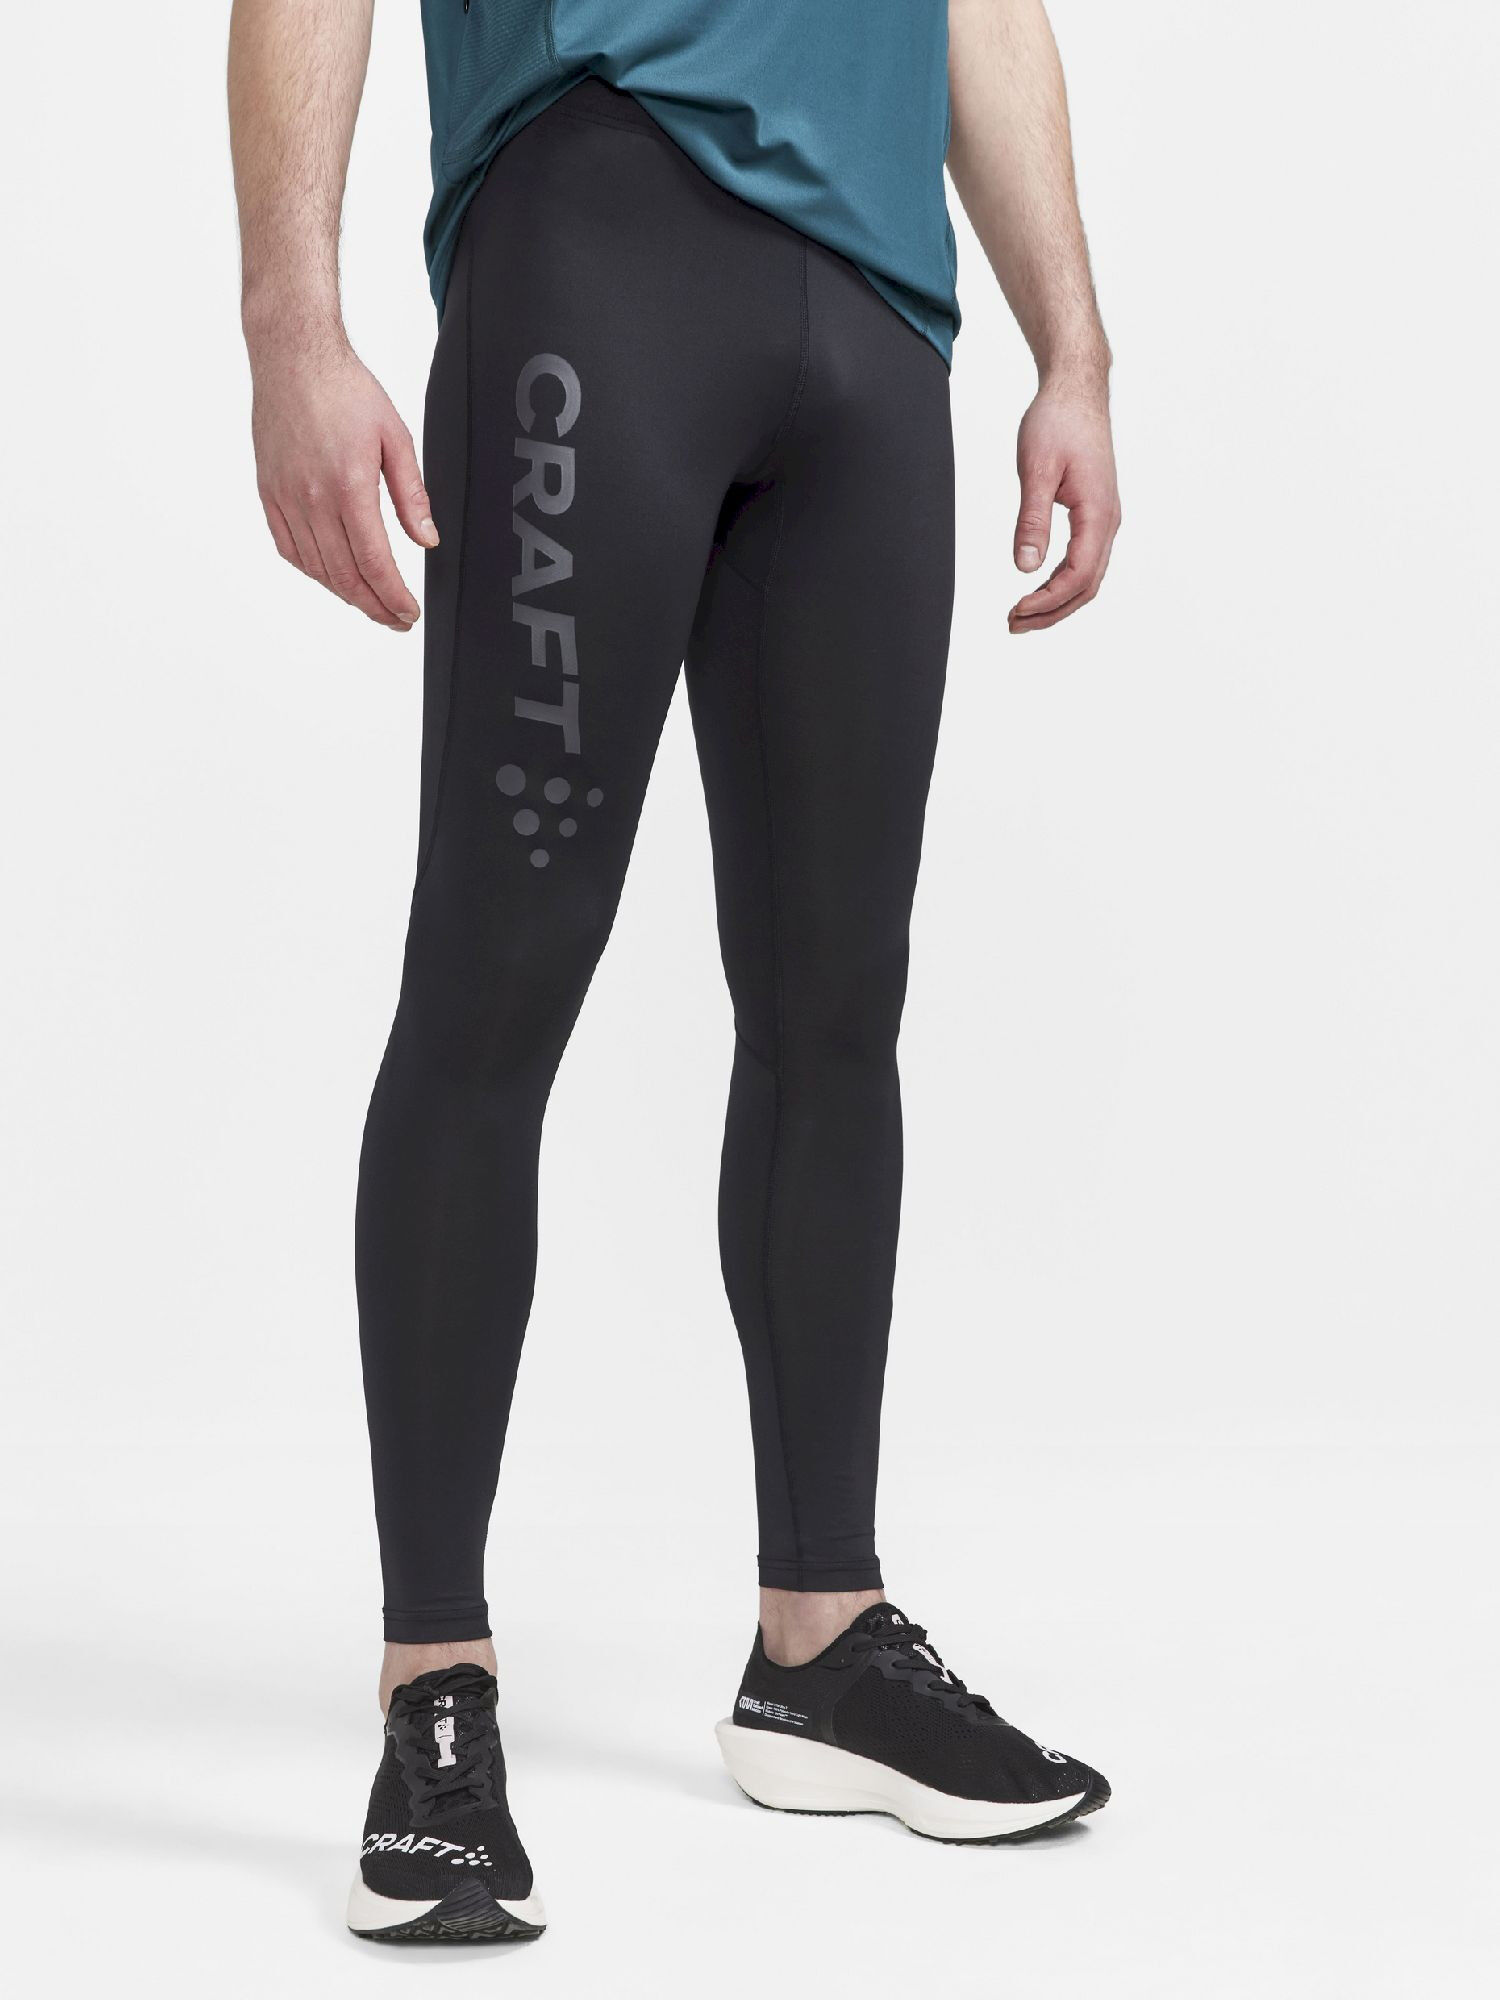 Craft Core Essence Tights - Running leggings - Men's | Hardloop